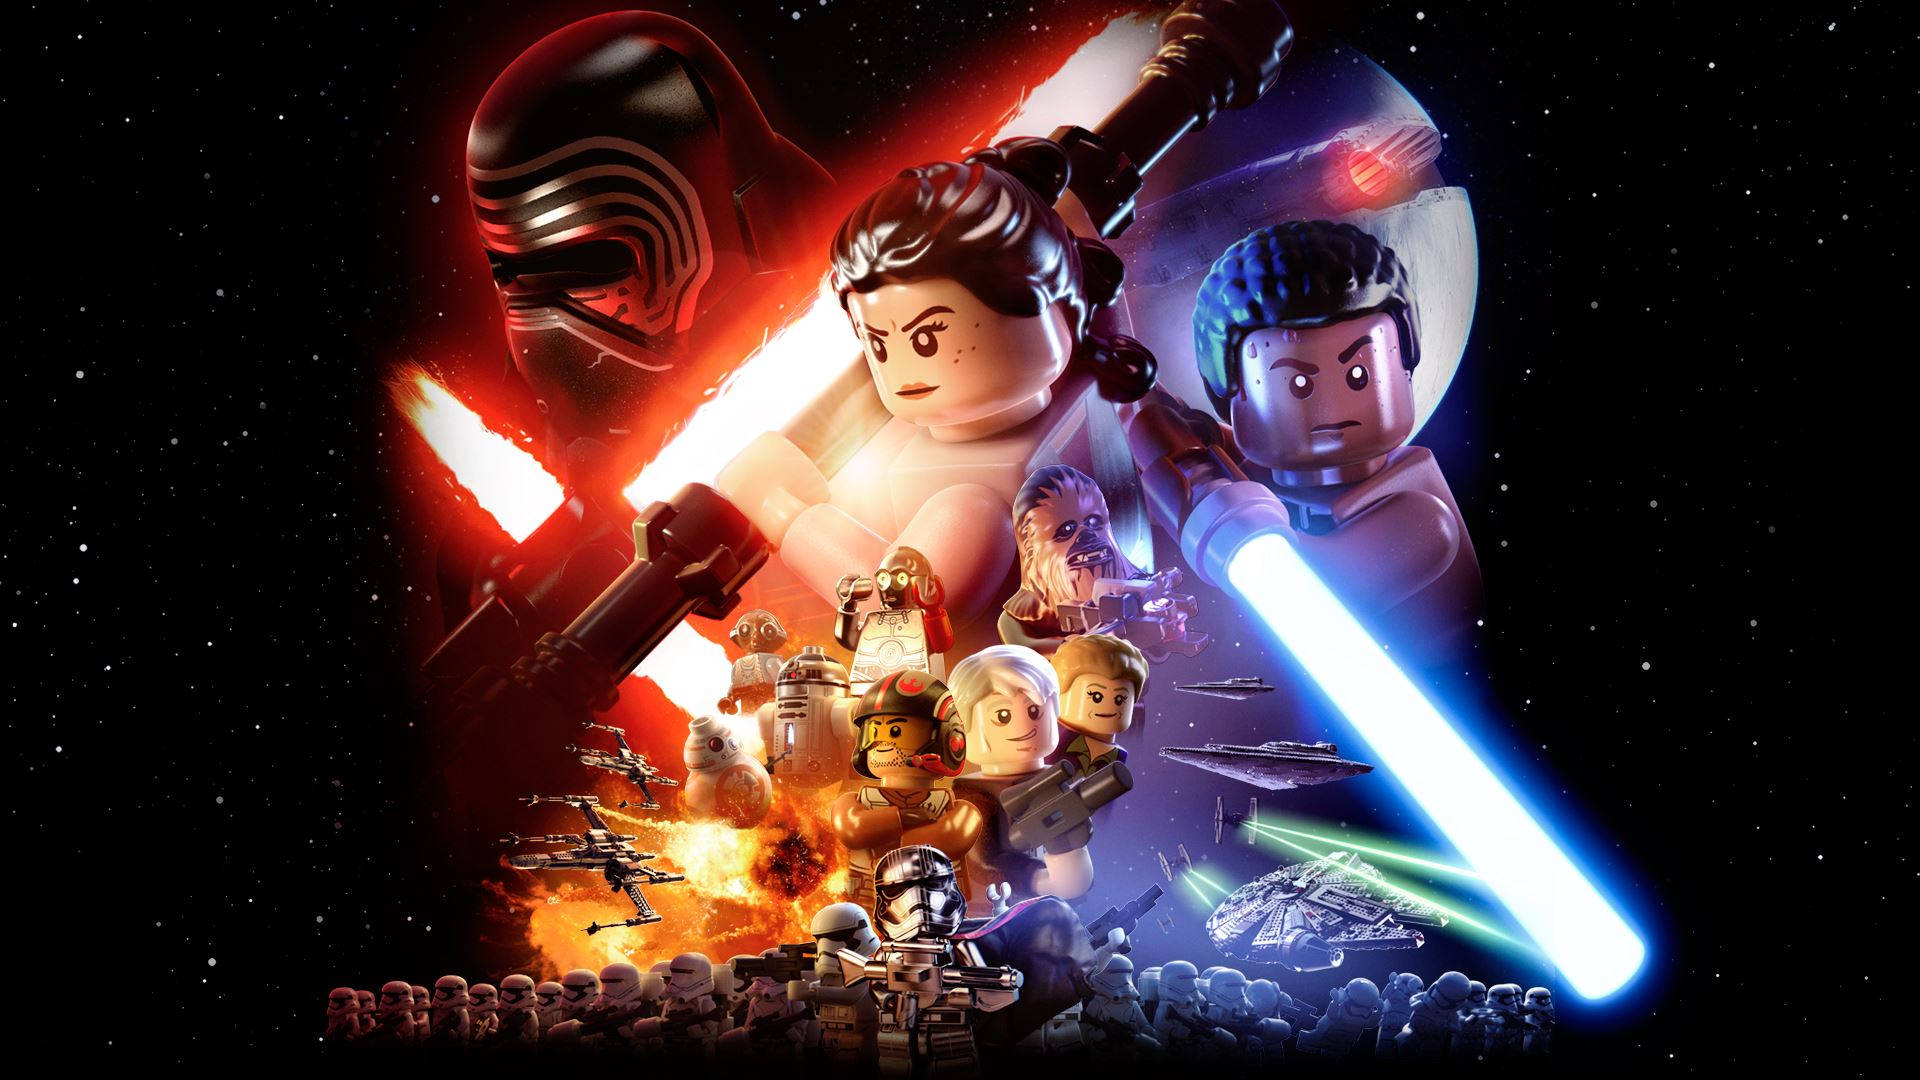 The Adventure of Lego Star Wars Wallpaper